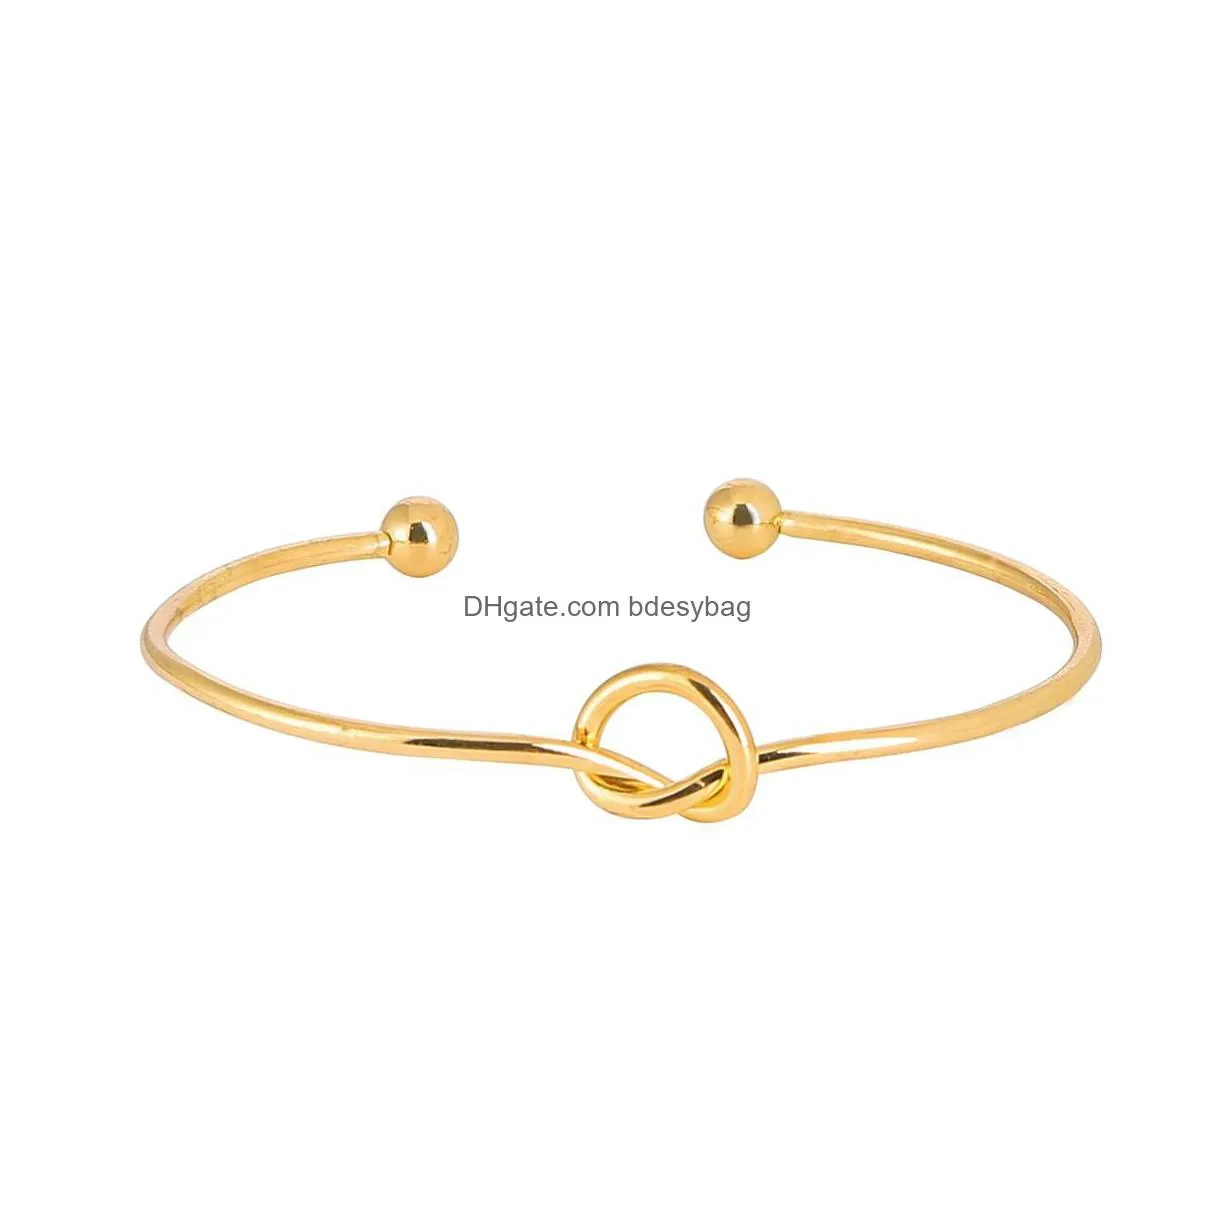 10pc/set fashion knot heart bracelet love heart crystal chain bangle bracelet friendship bracelet handemade jewelry